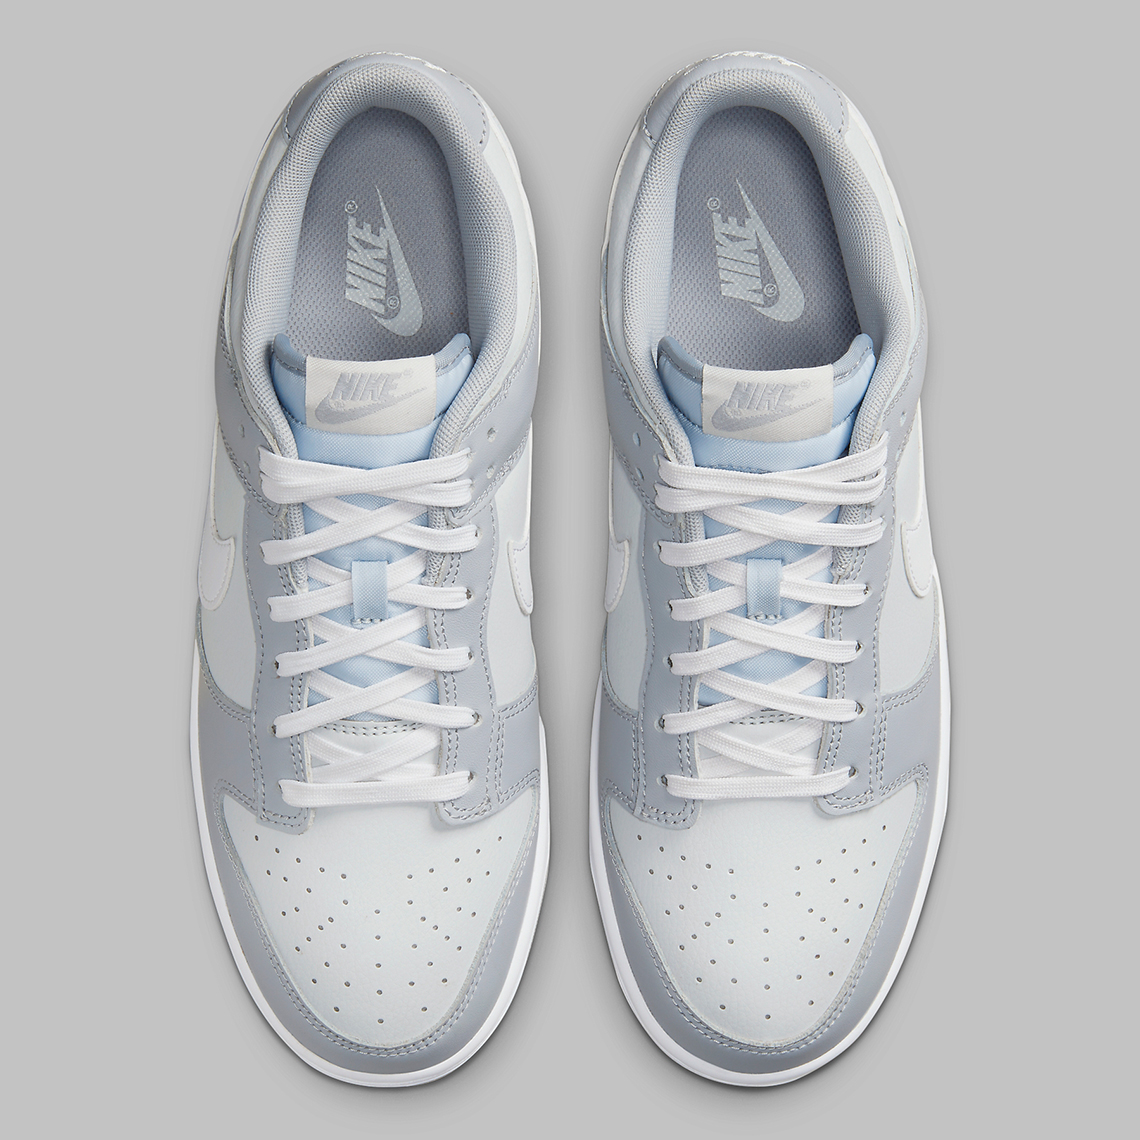 nike blue grey team hustle d7 basketball shoes Grey White Dj6188 001 Release Date 5